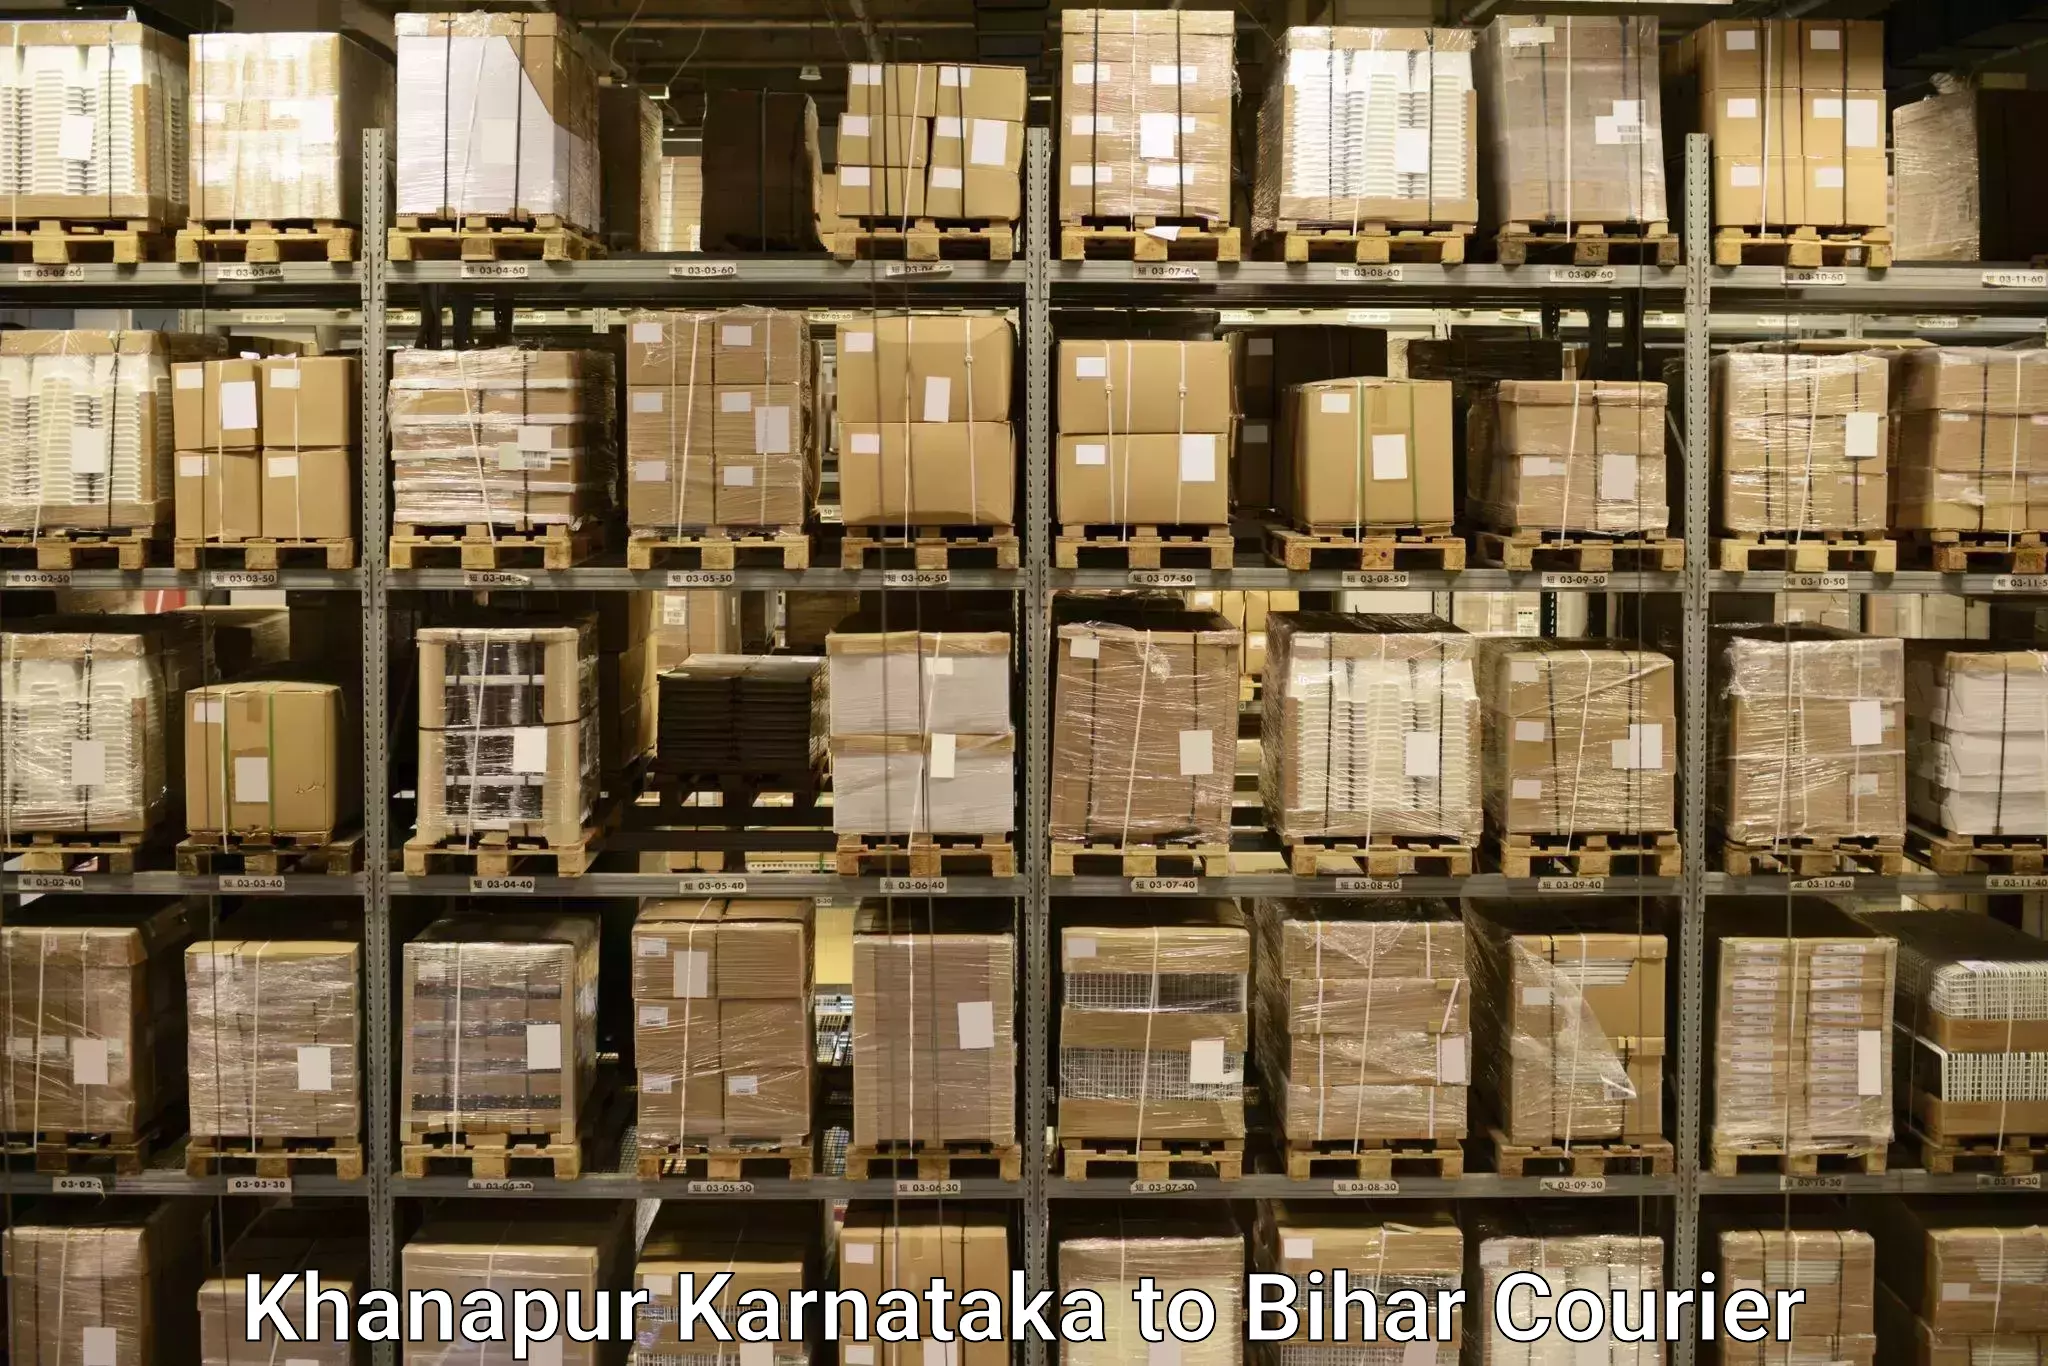 Same day luggage service Khanapur Karnataka to IIIT Bhagalpur